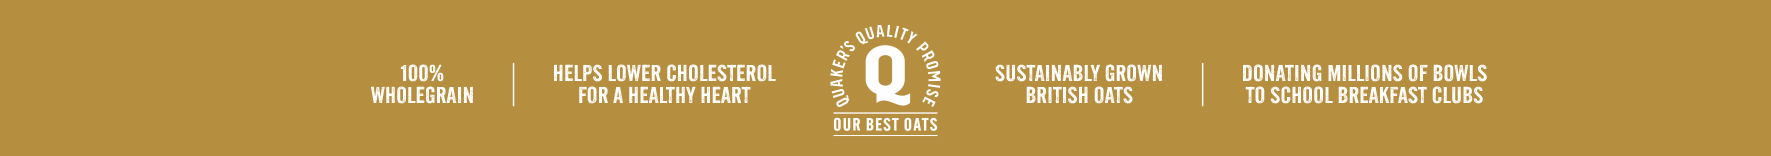 Quaker's Quality Promise